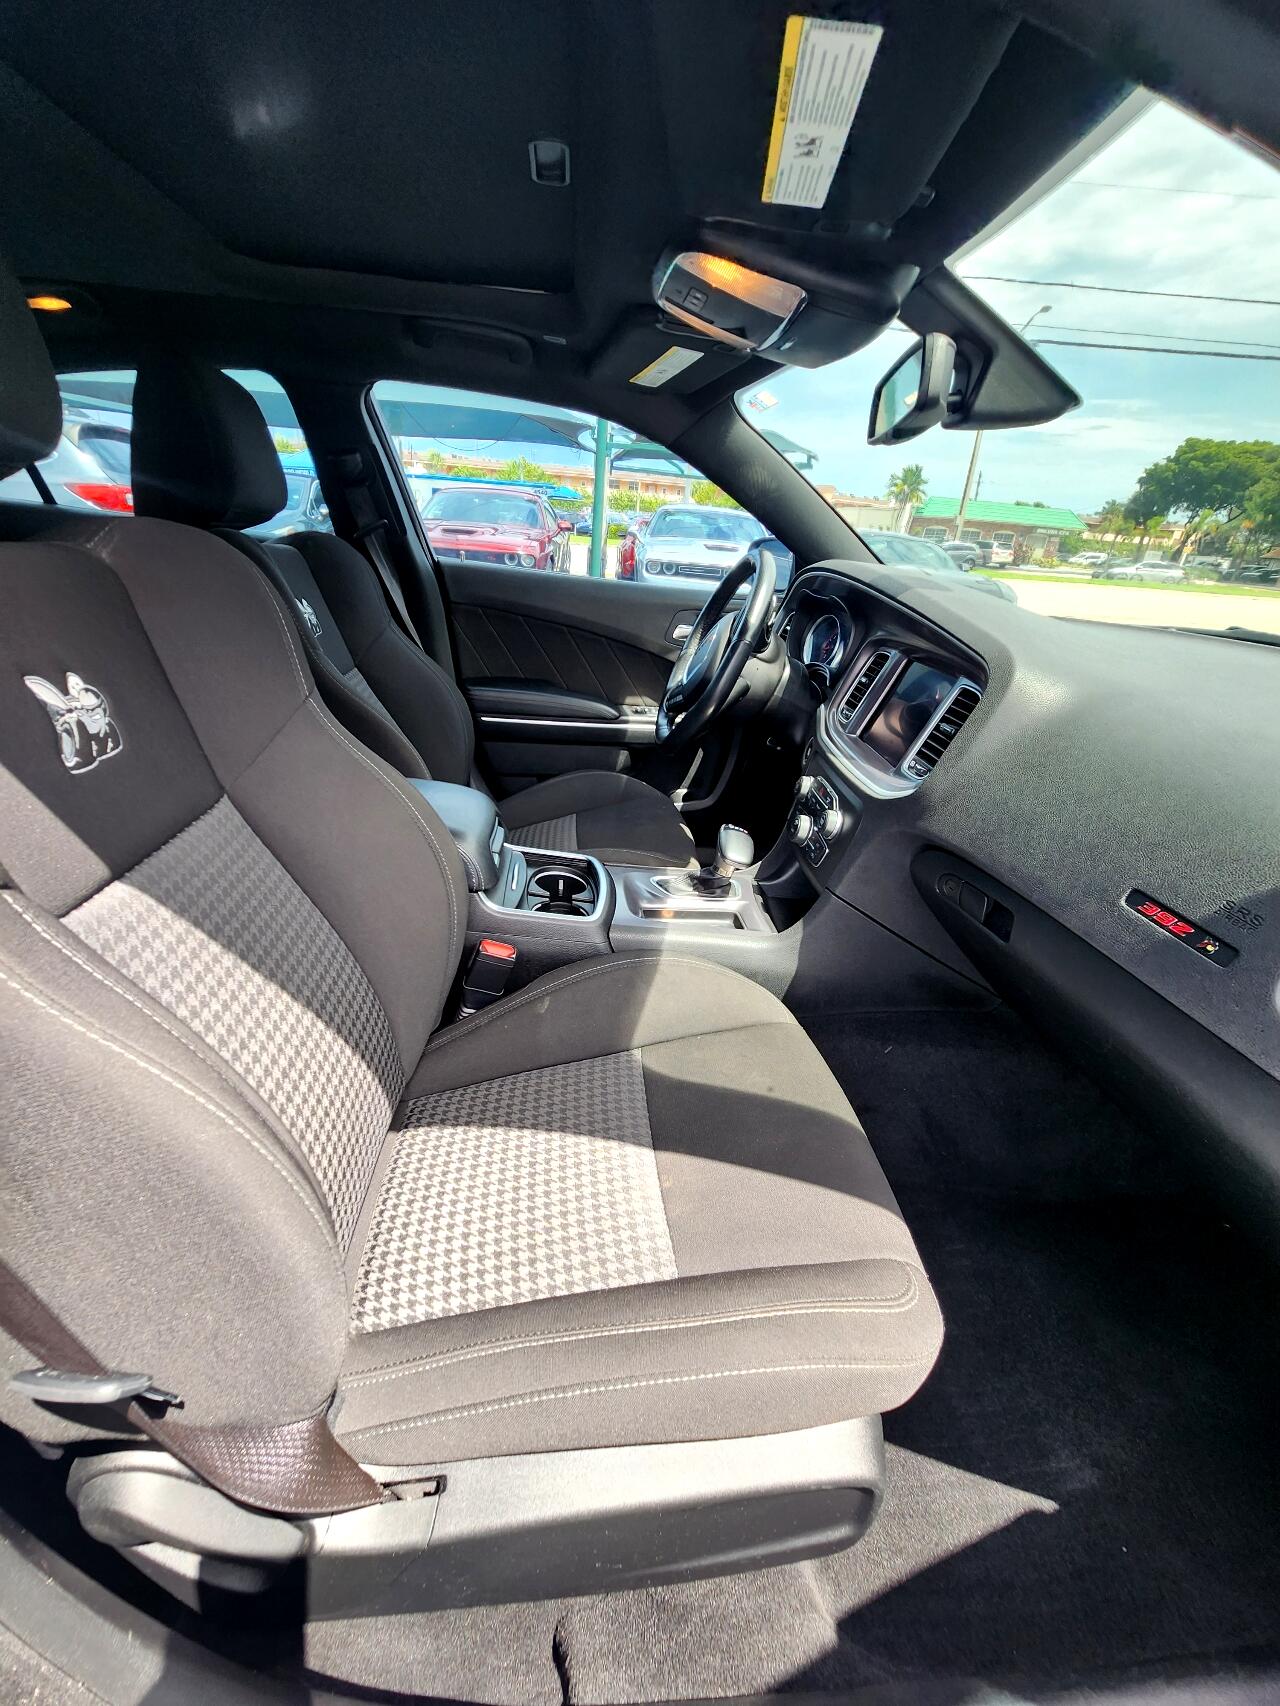 2021 DODGE Charger Sedan - $46,999